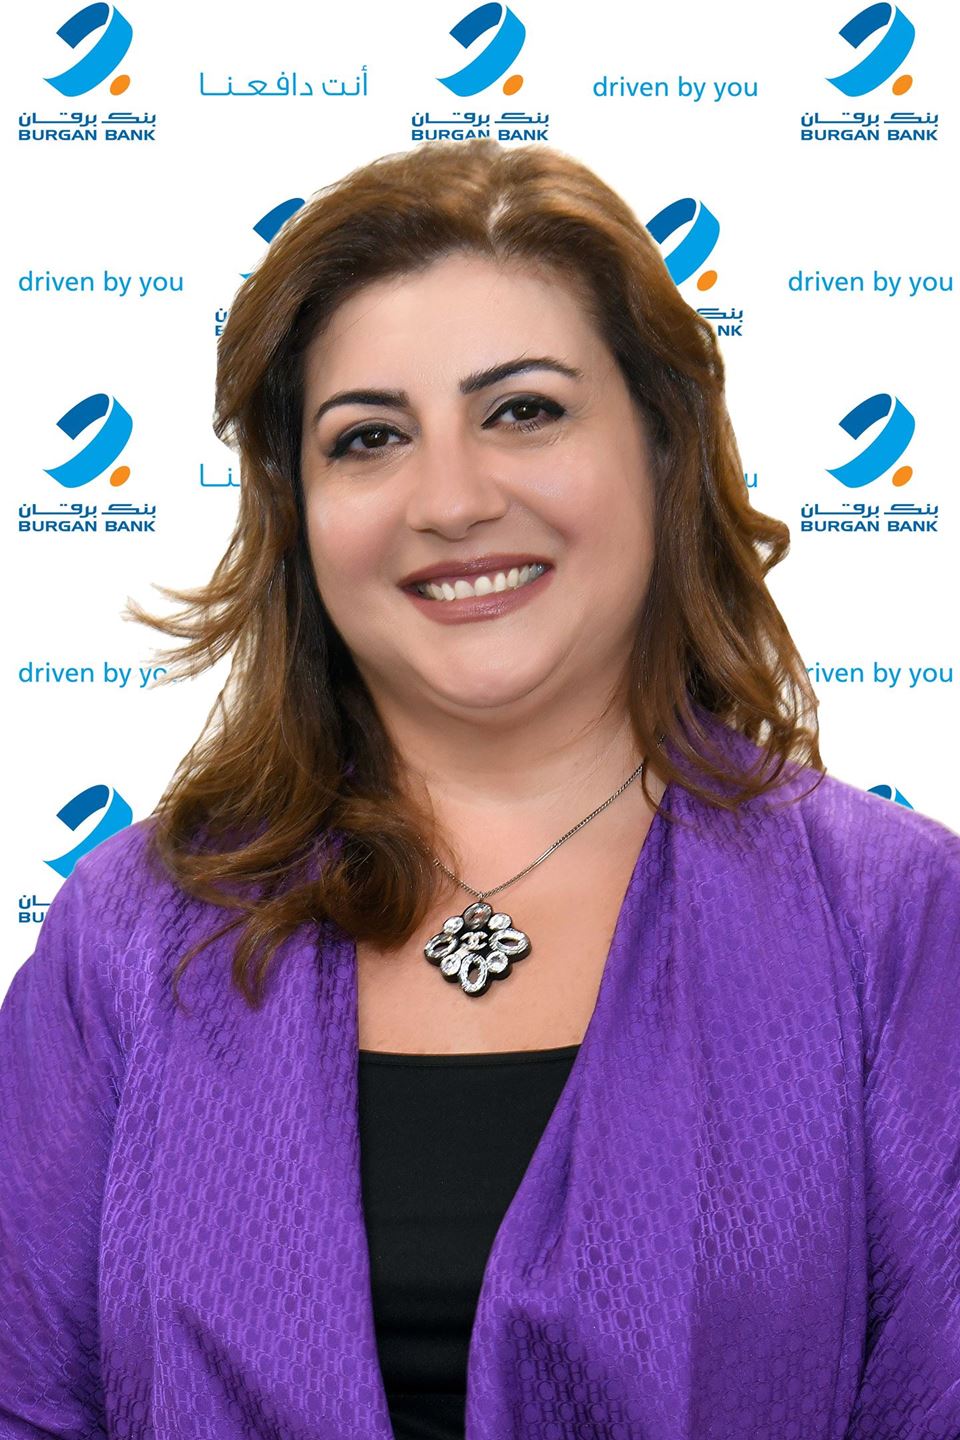 Mrs. Ghada El-Kadi, Unit Head of the Learning and Talent Development Unit at Burgan Bank